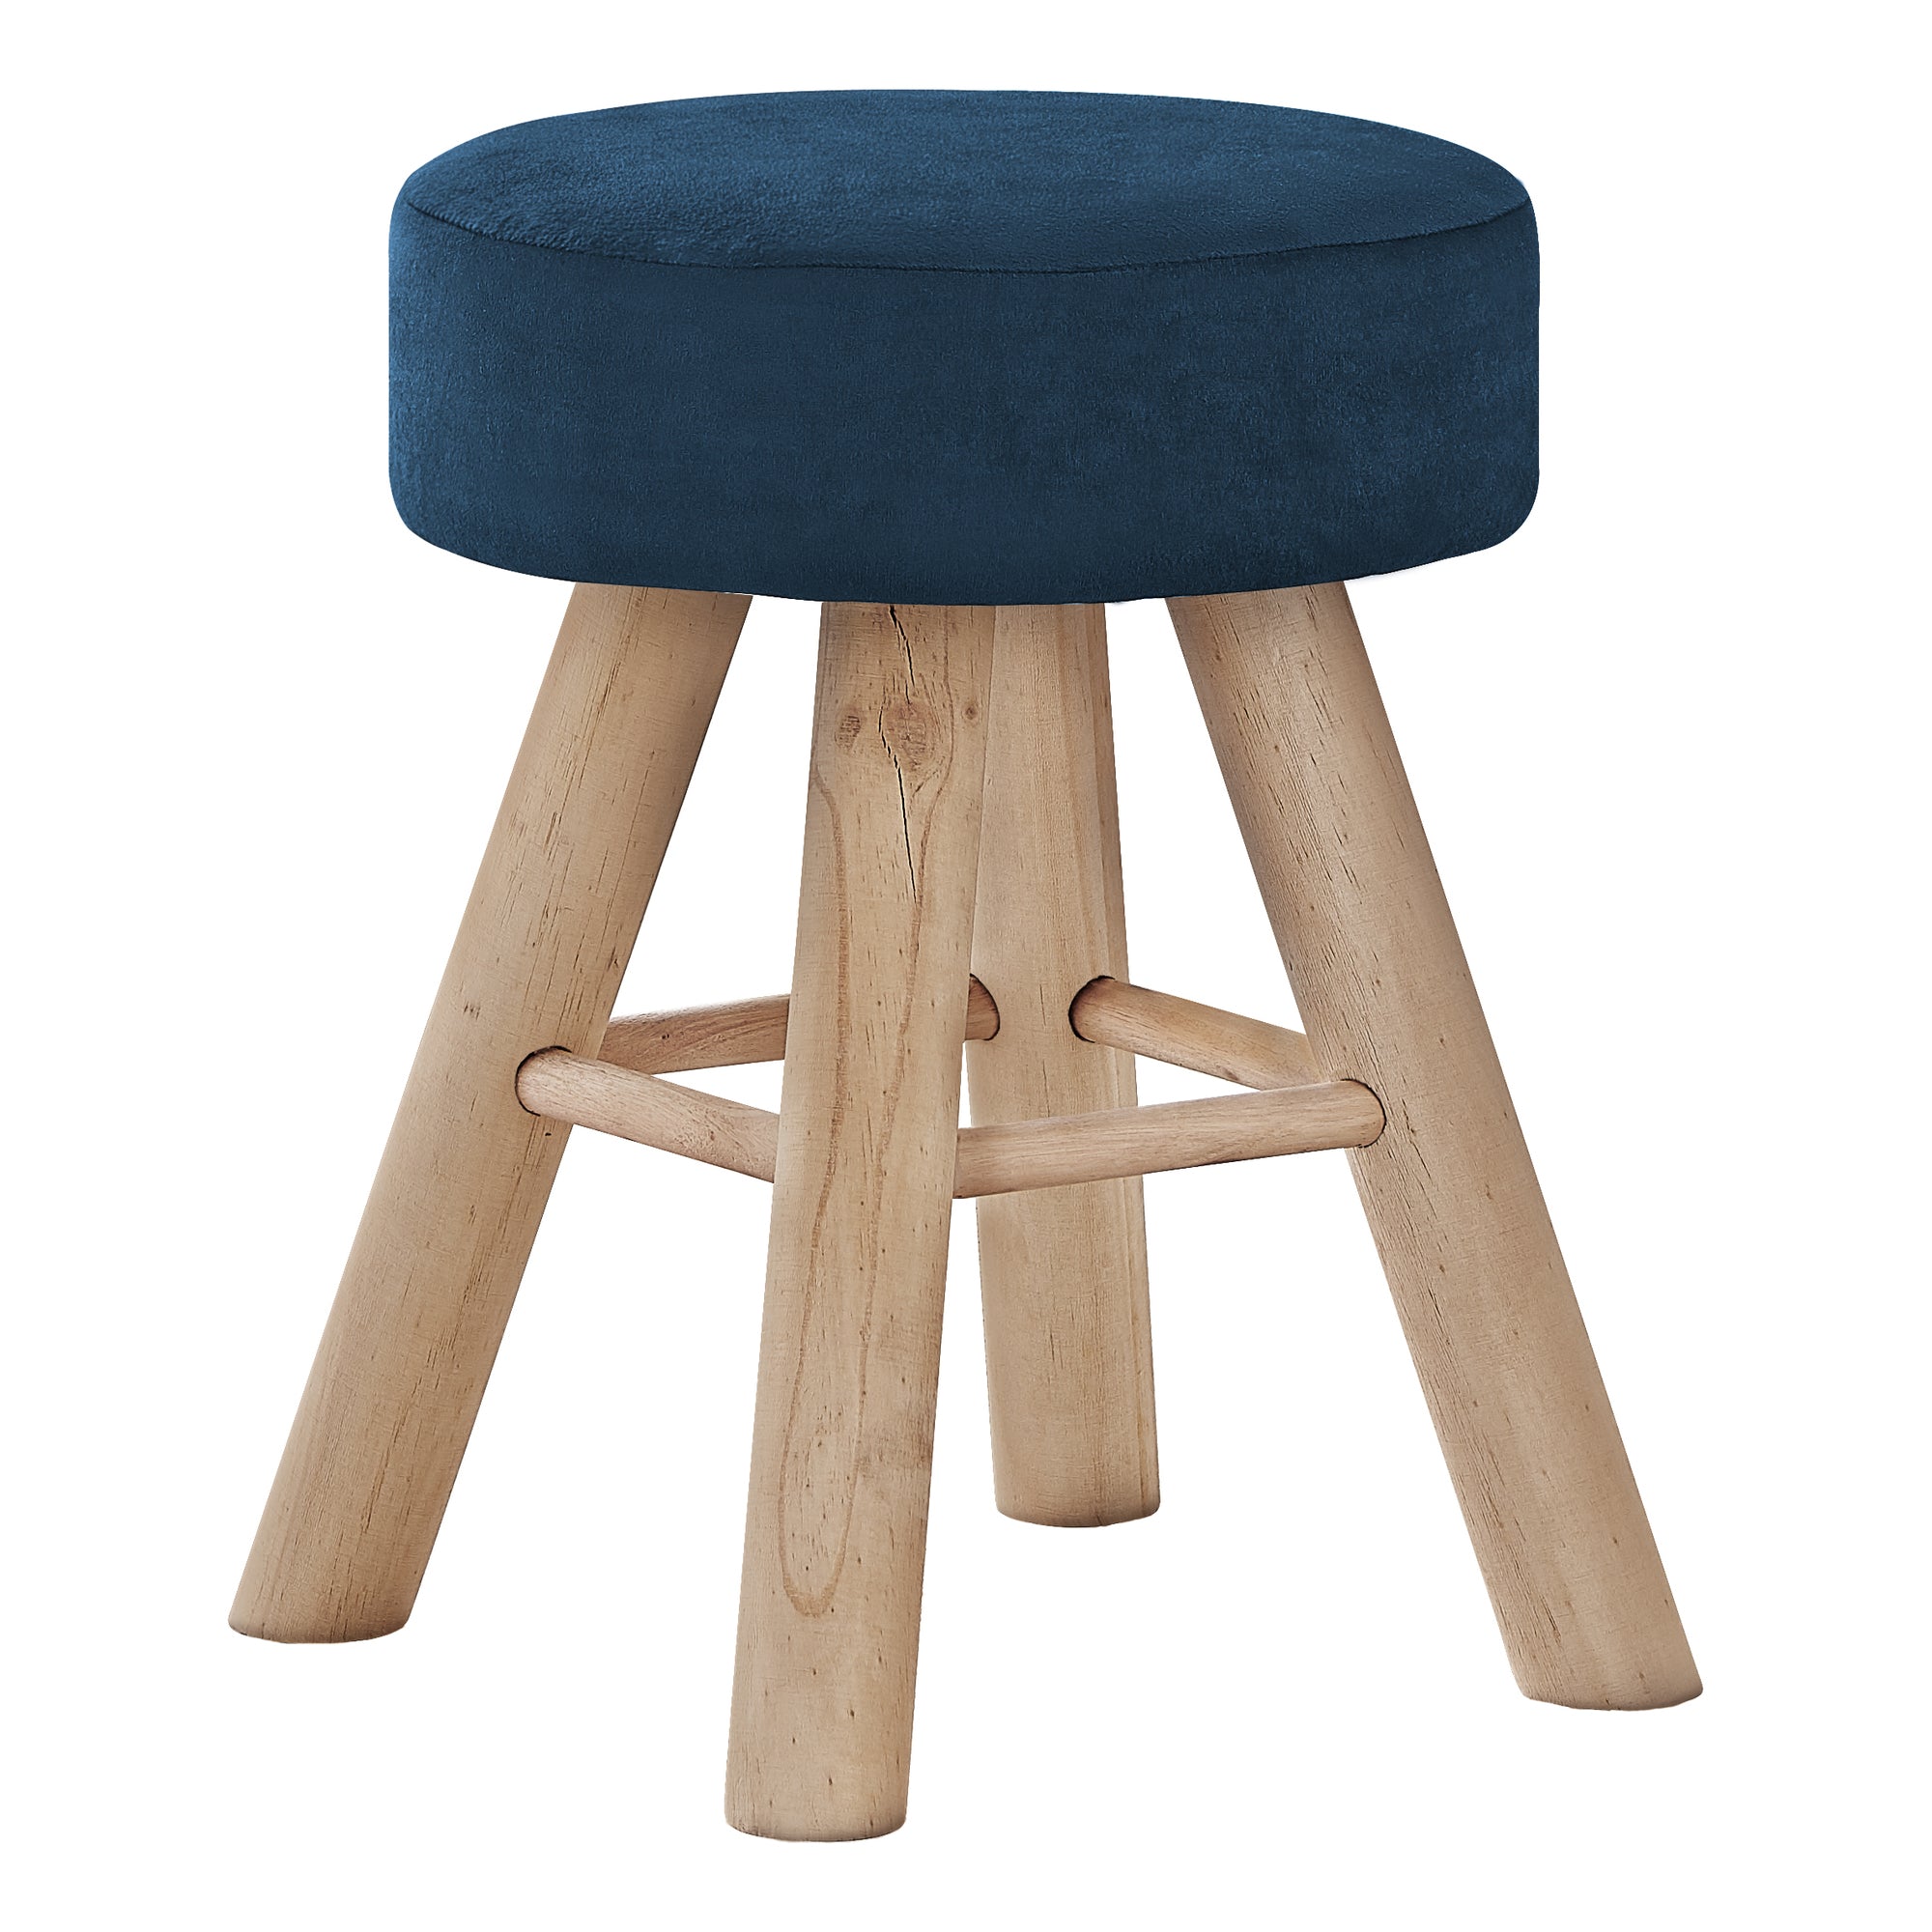 MN-269011    Ottoman, Pouf, Footrest, Foot Stool, 12" Round, Velvet Fabric, Wood Legs, Blue, Natural, Contemporary, Modern